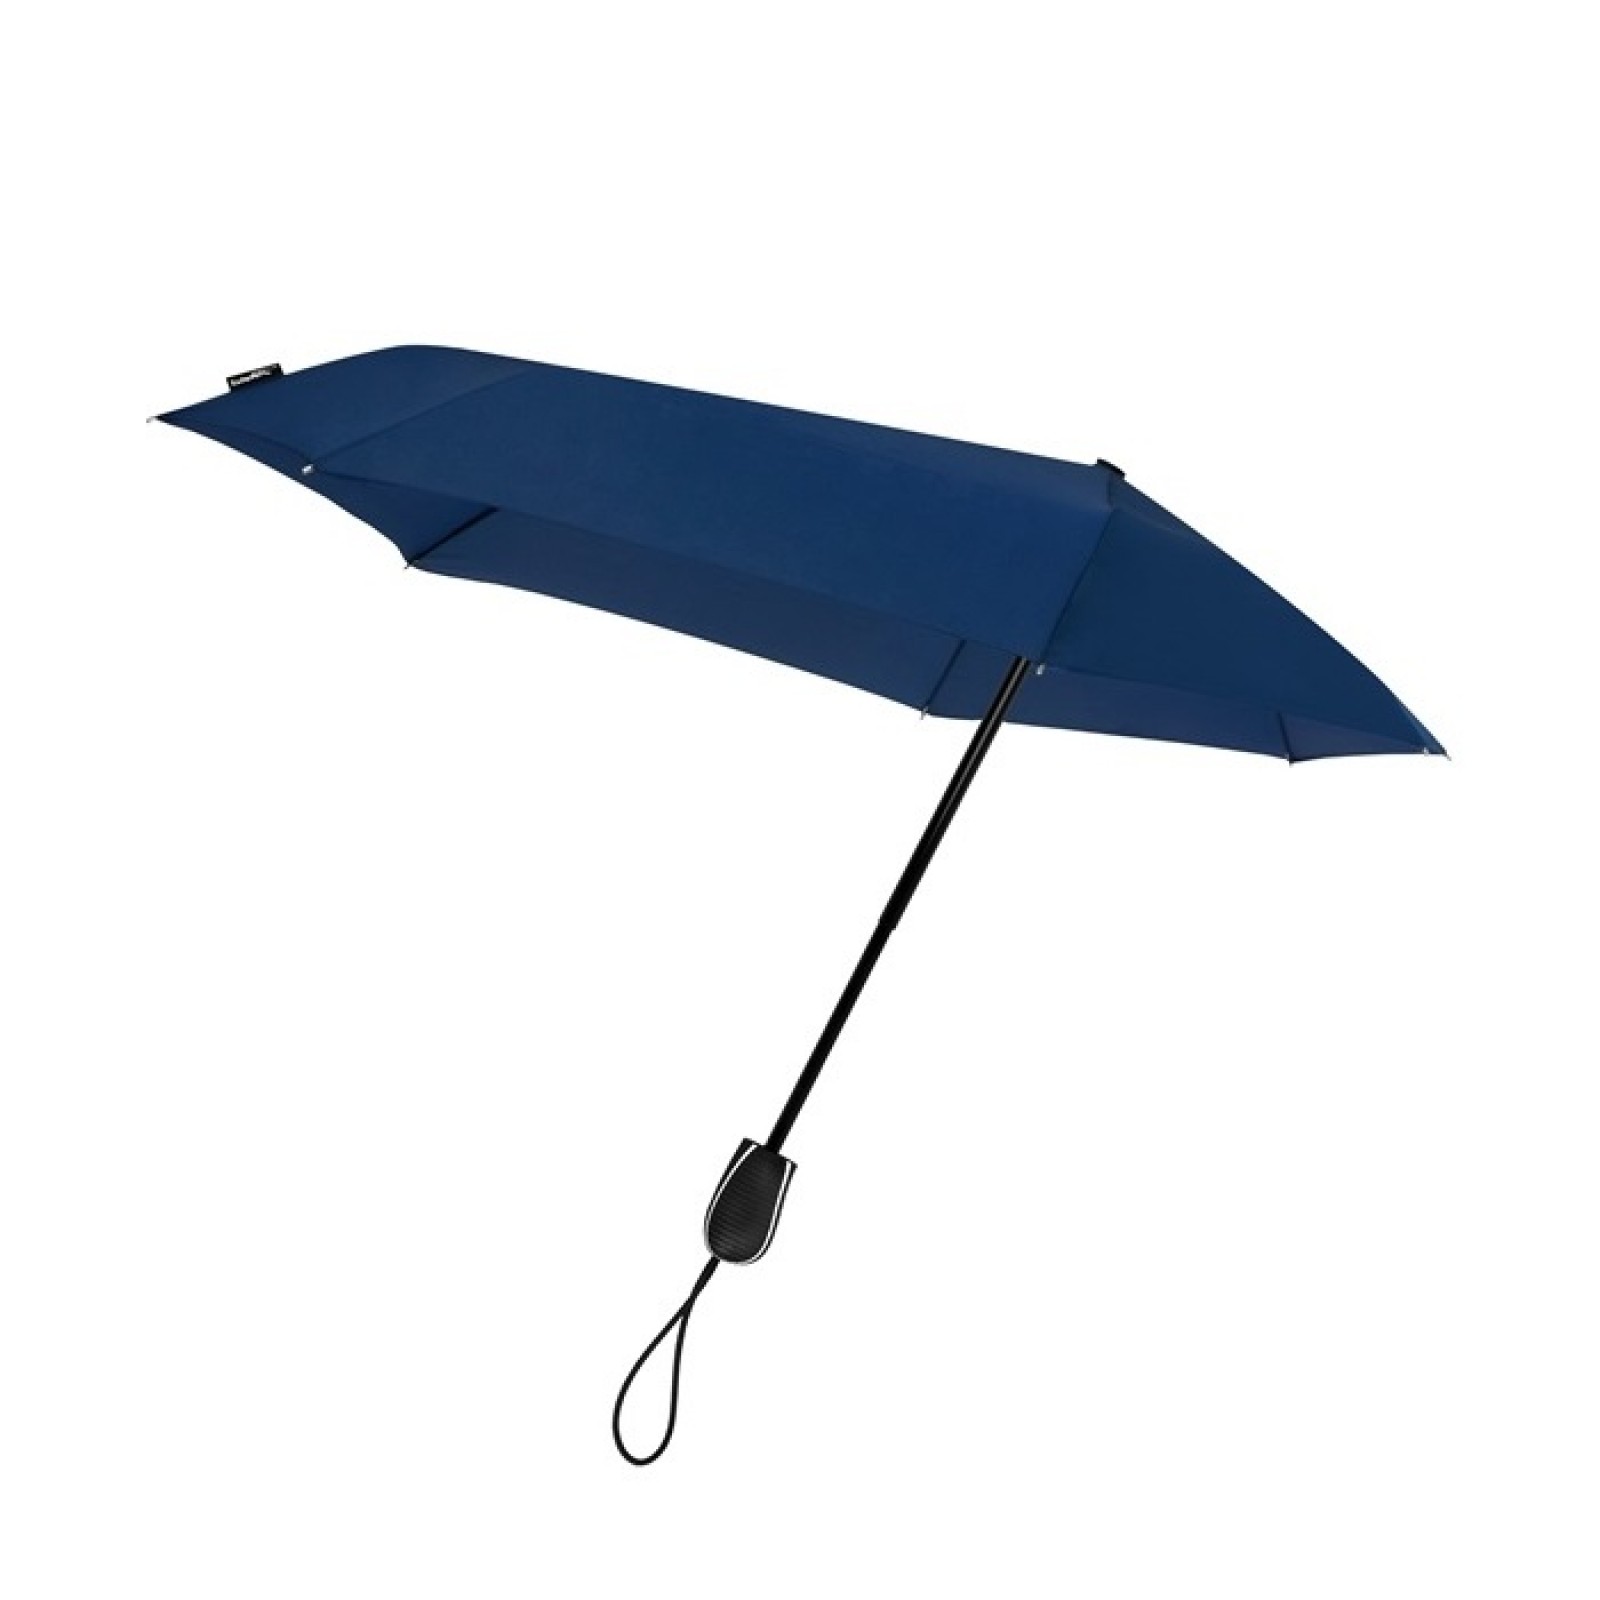 Blaast op feedback Fondsen Impliva STORMini Folding Storm Umbrella Blue | Design Is This